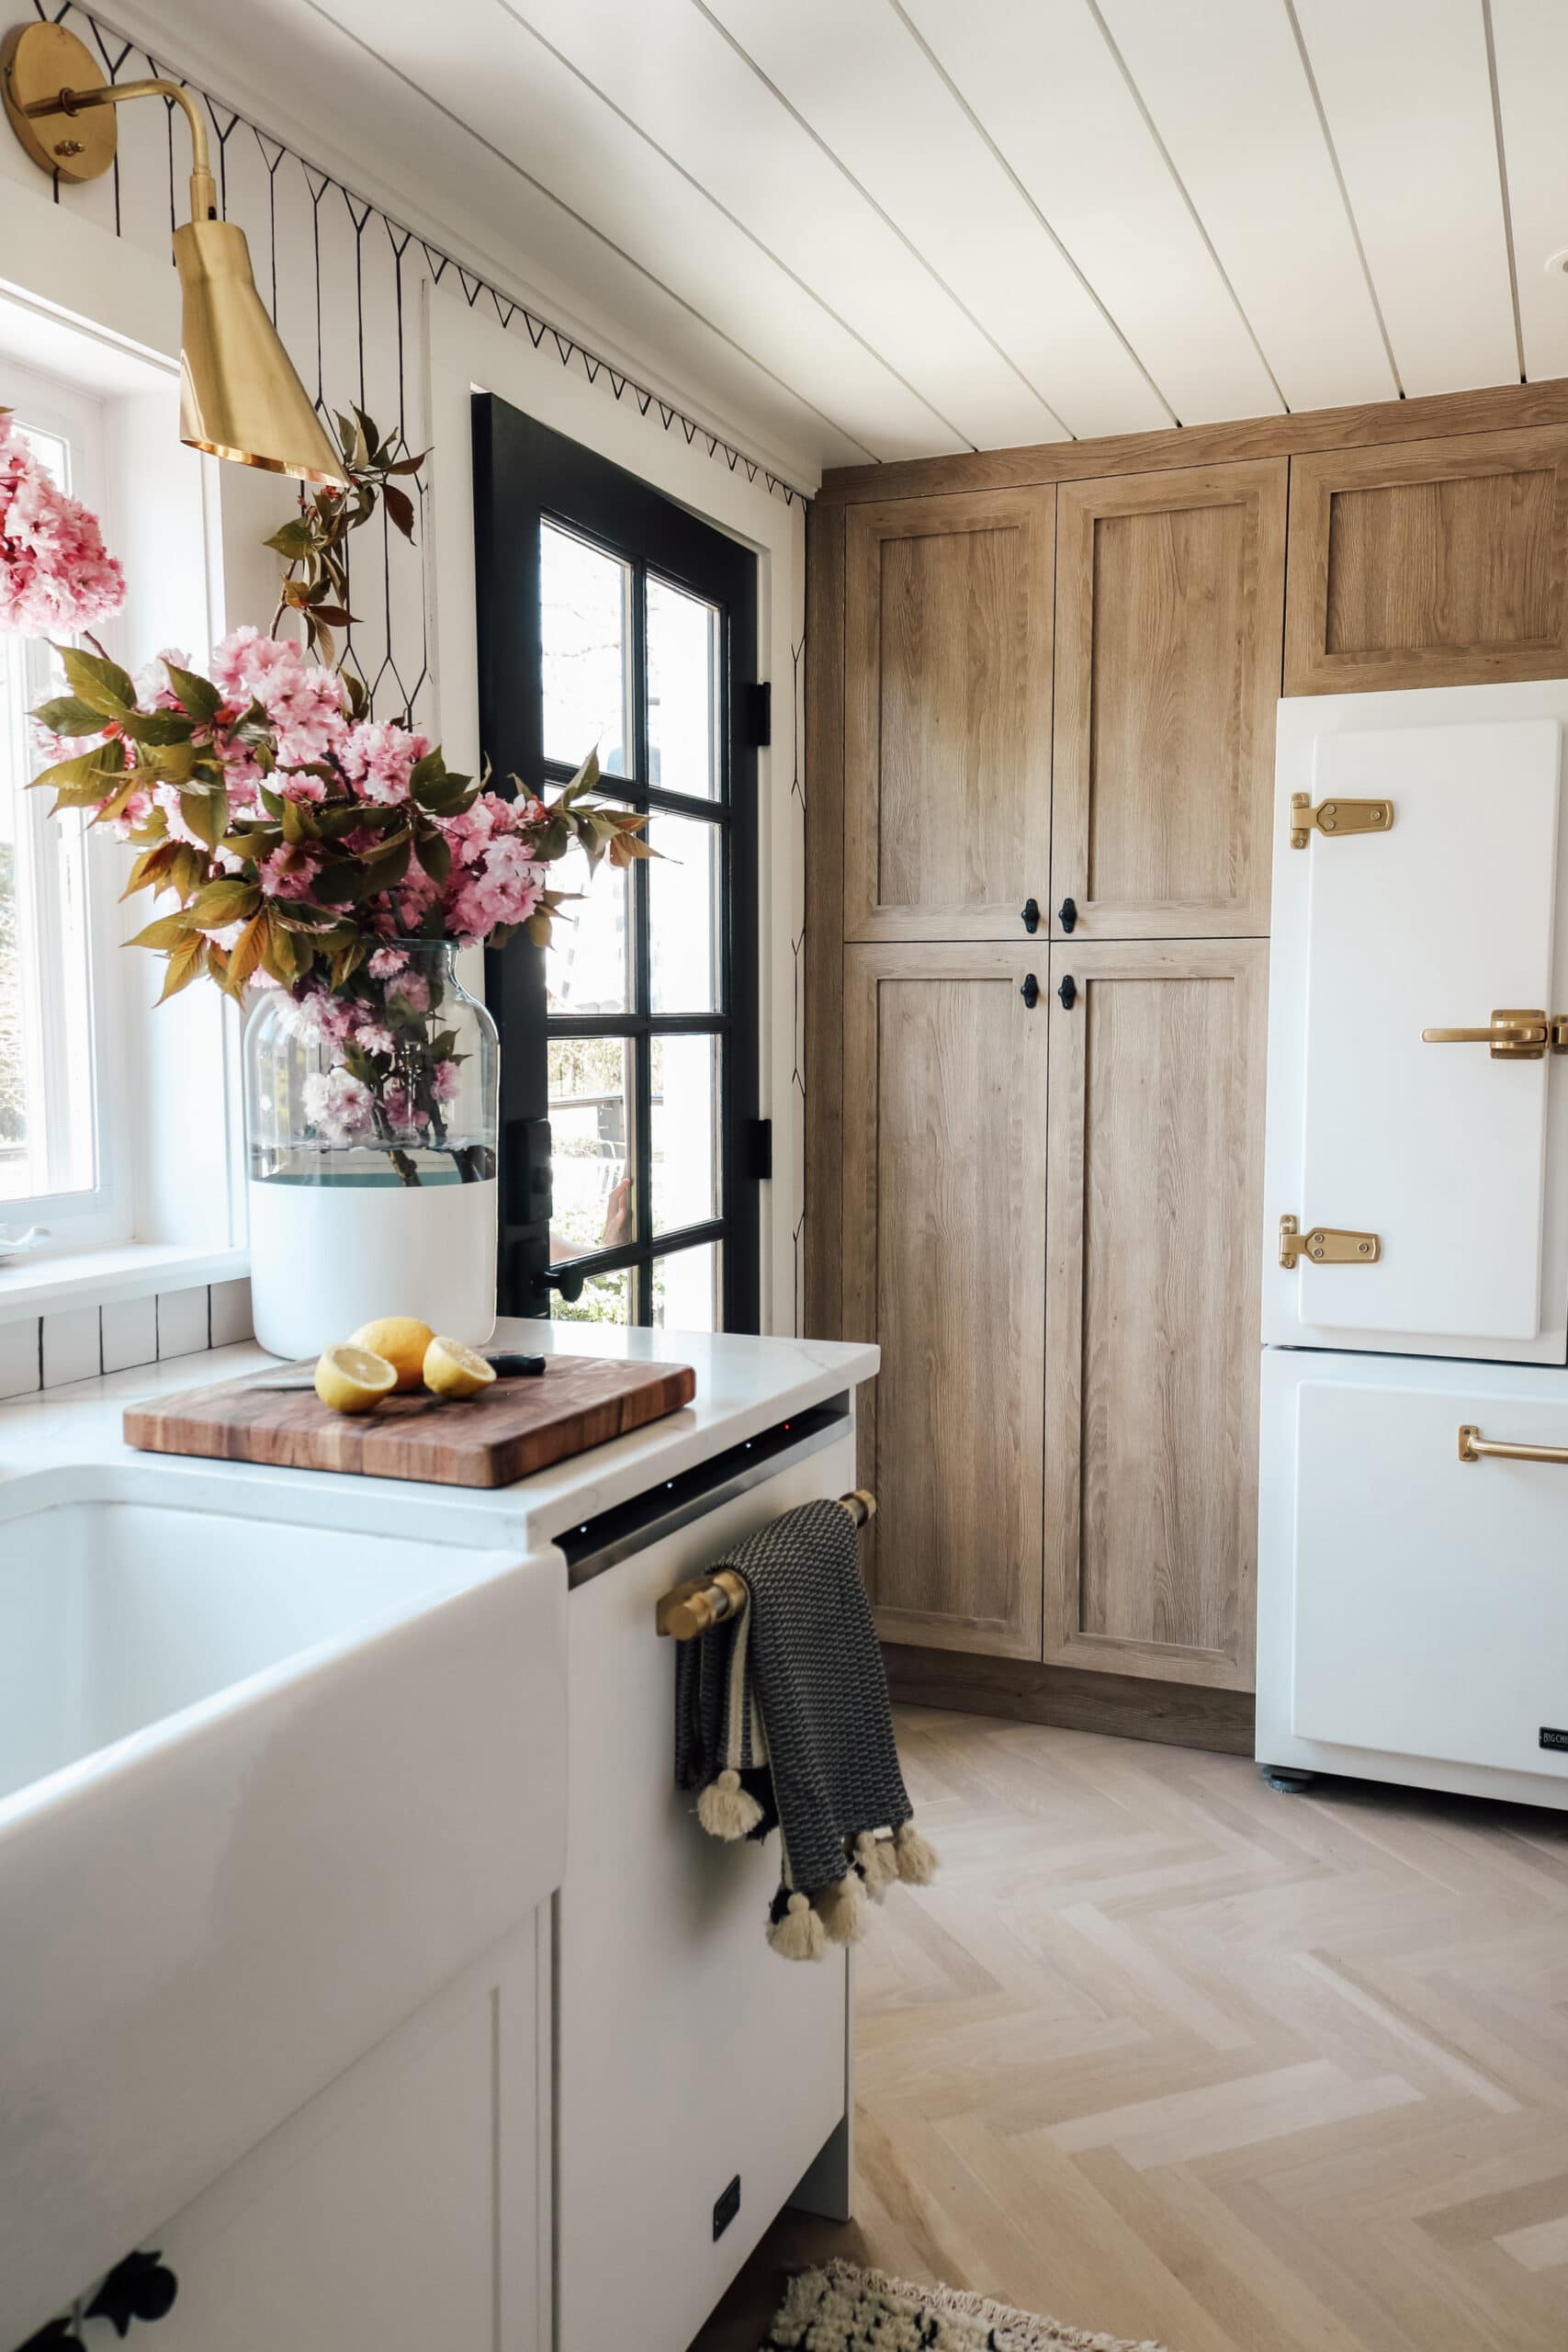 White fridge with wood like kitchen cabinets